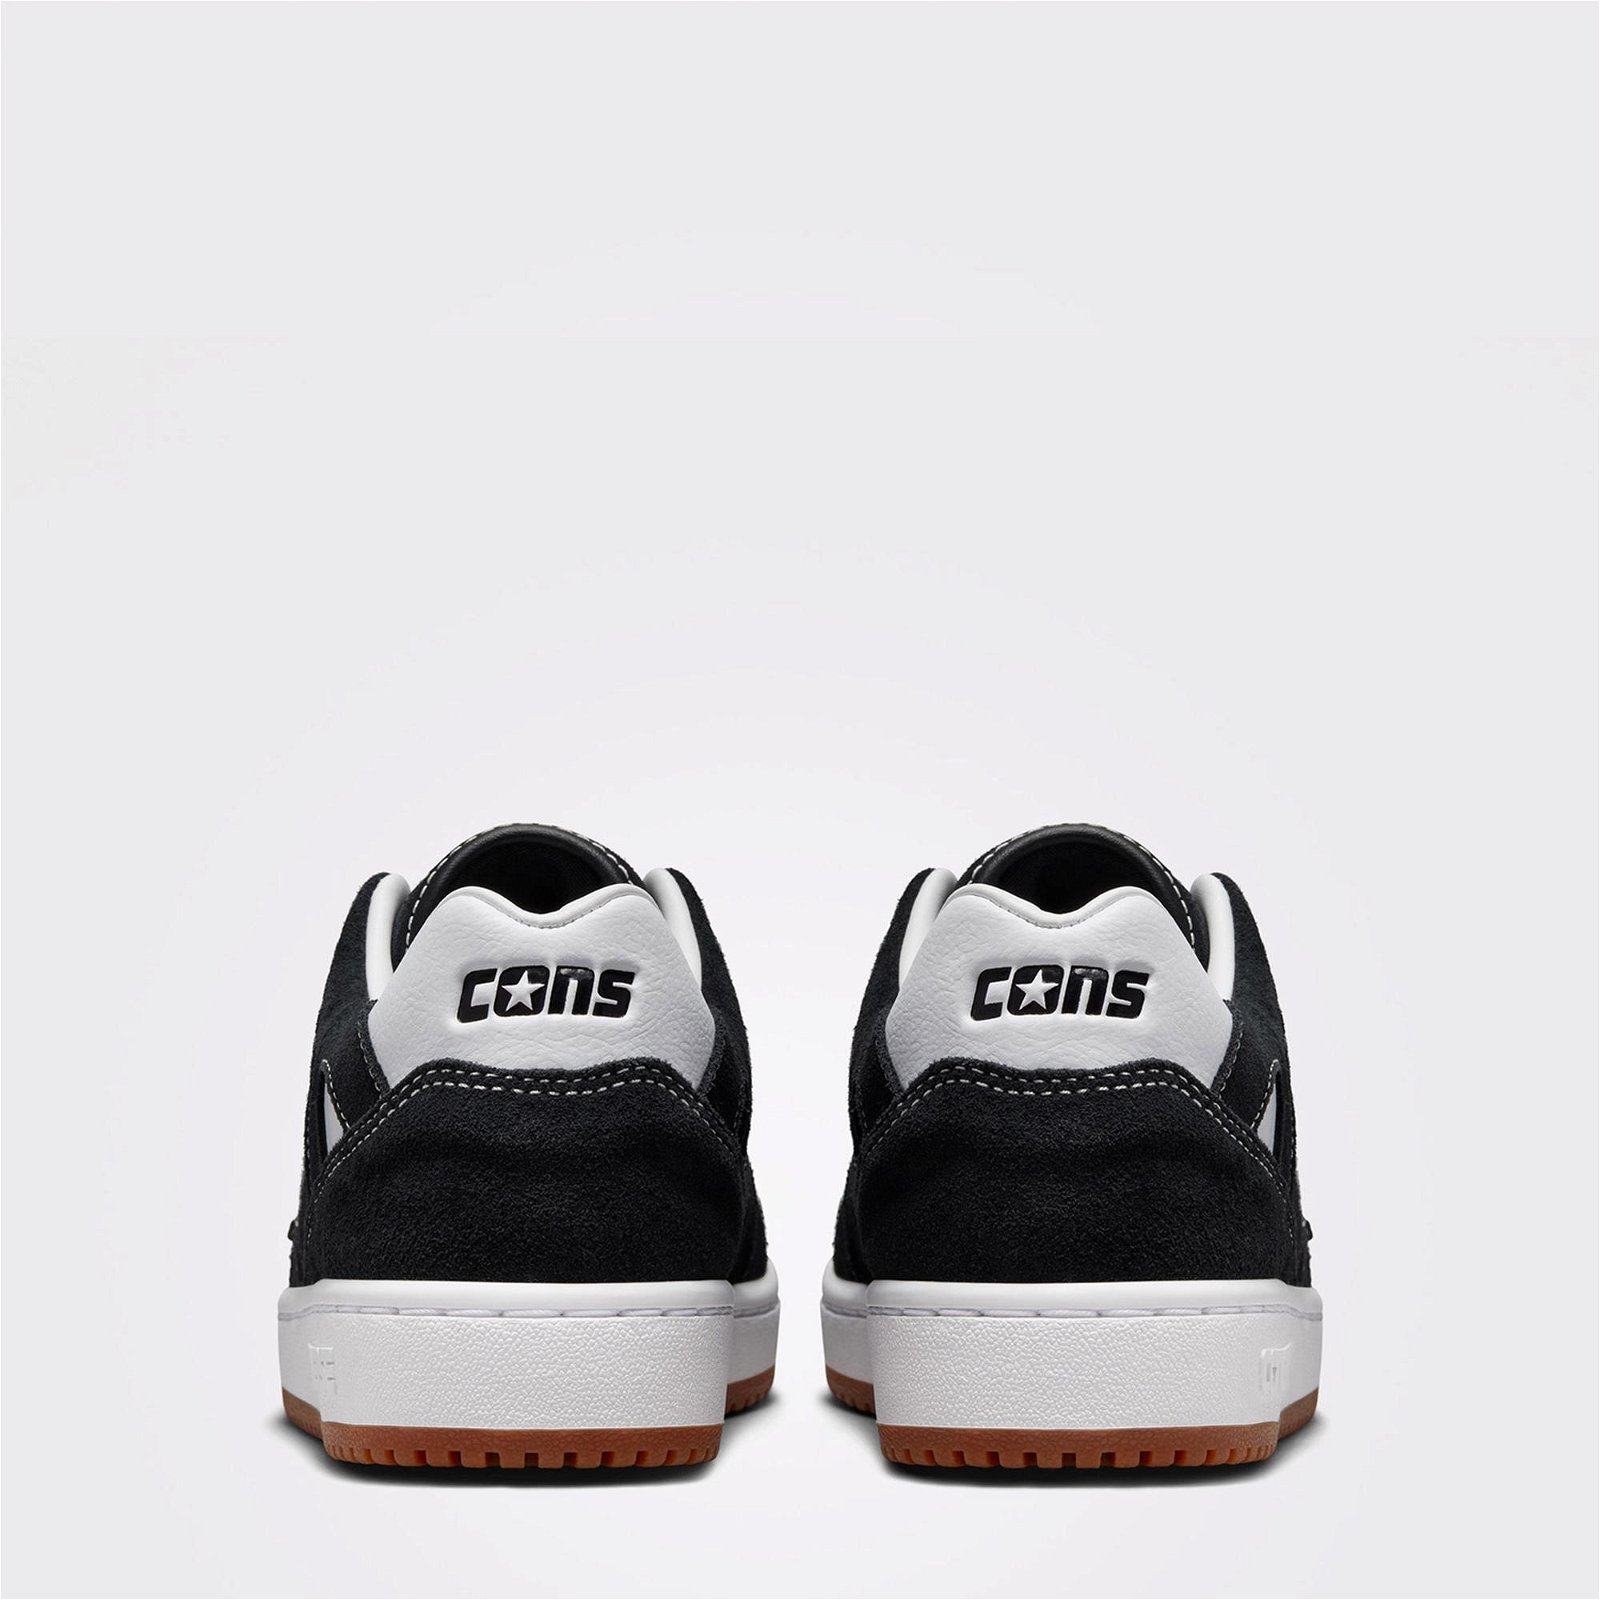 Converse As-1 Pro Unisex Siyah Sneaker